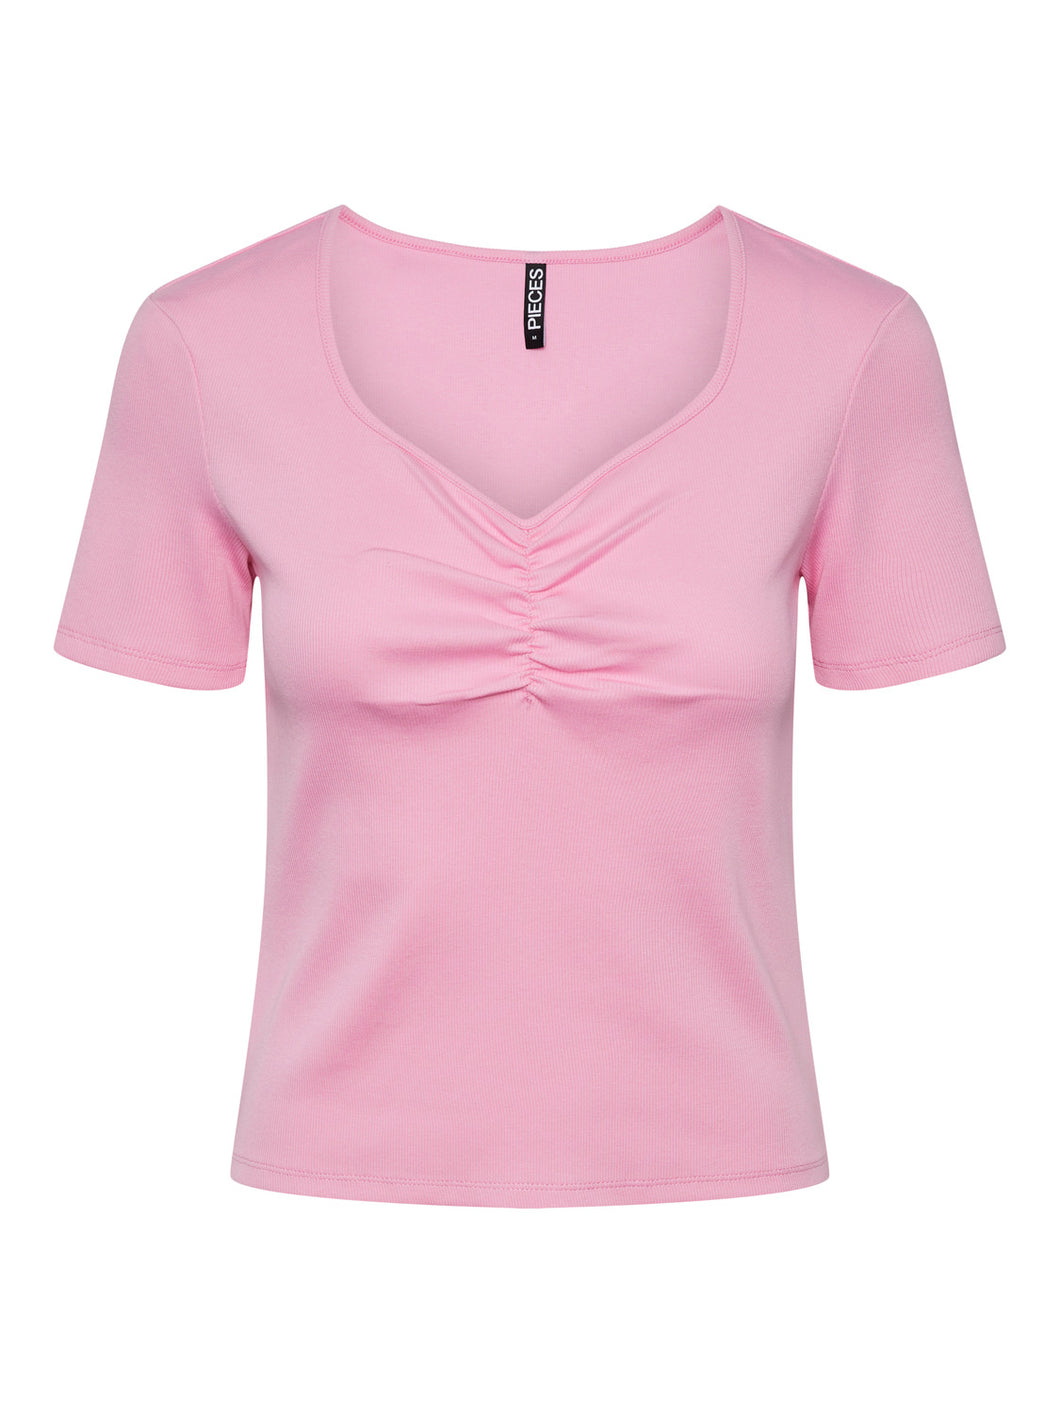 PCTANIA T-Shirts & Tops - Begonia Pink